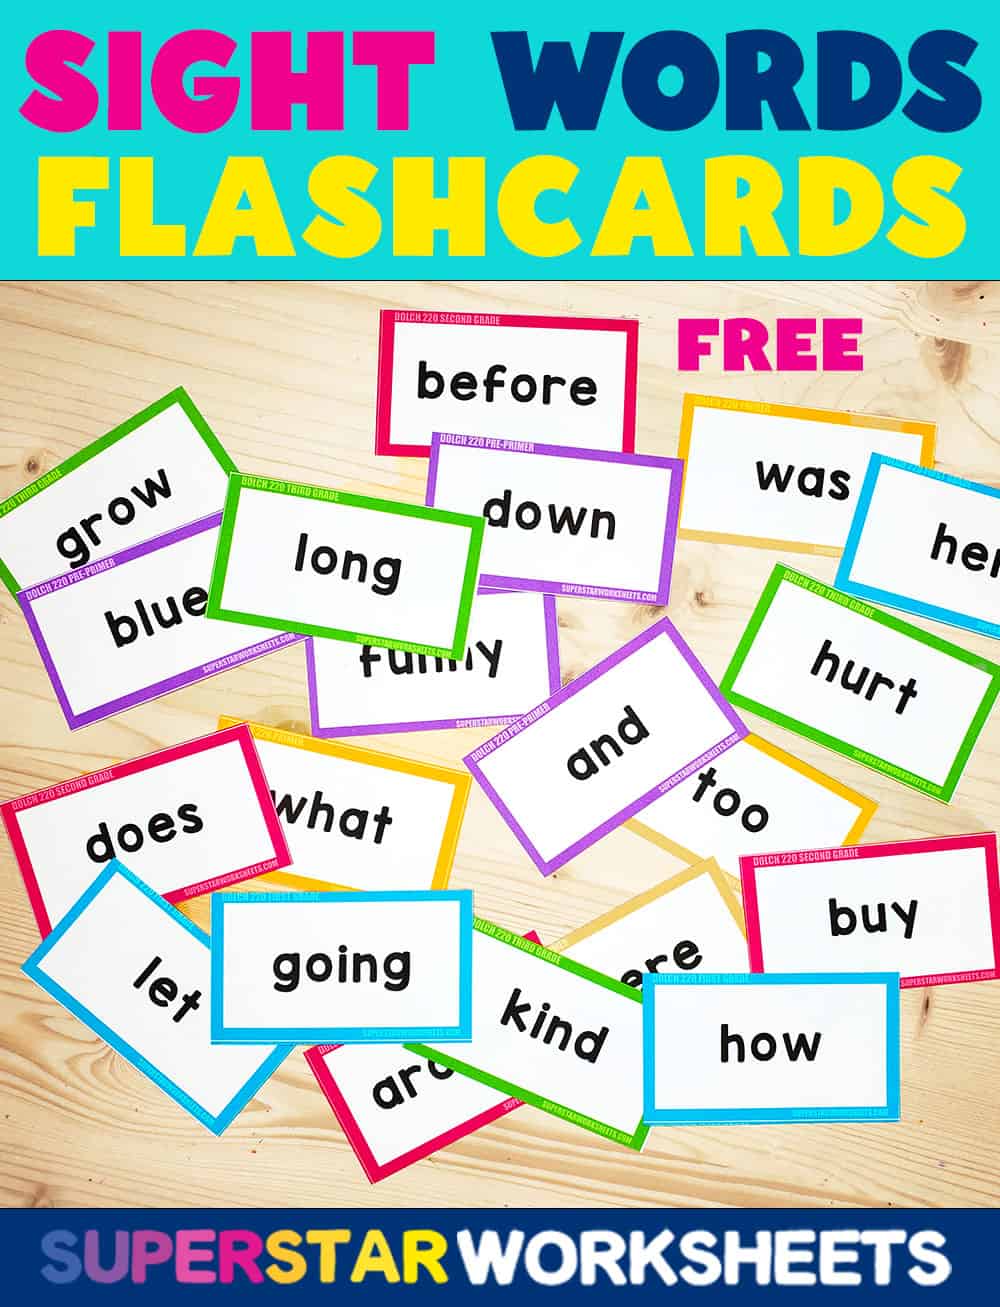 Sight Word Flashcards - Superstar Worksheets